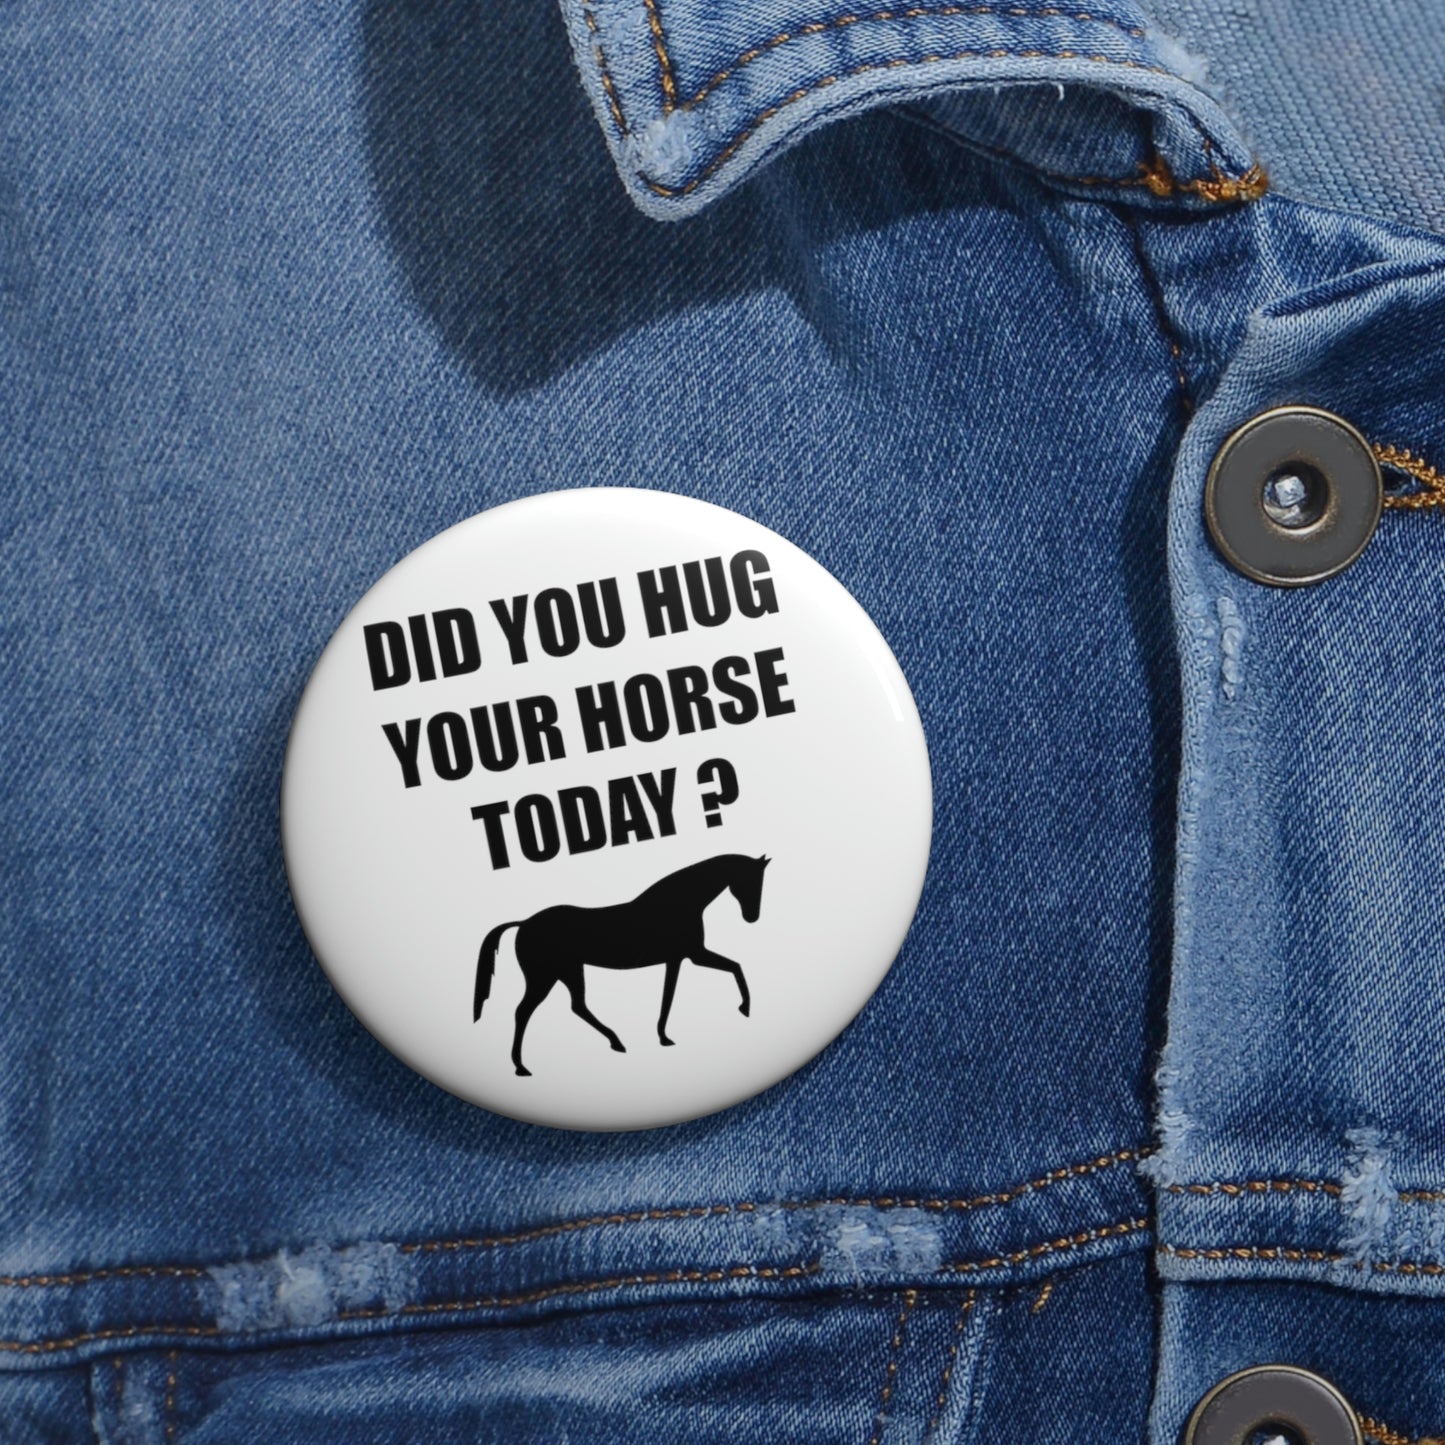 Horse Hugs - Custom Pin Buttons - White / Black